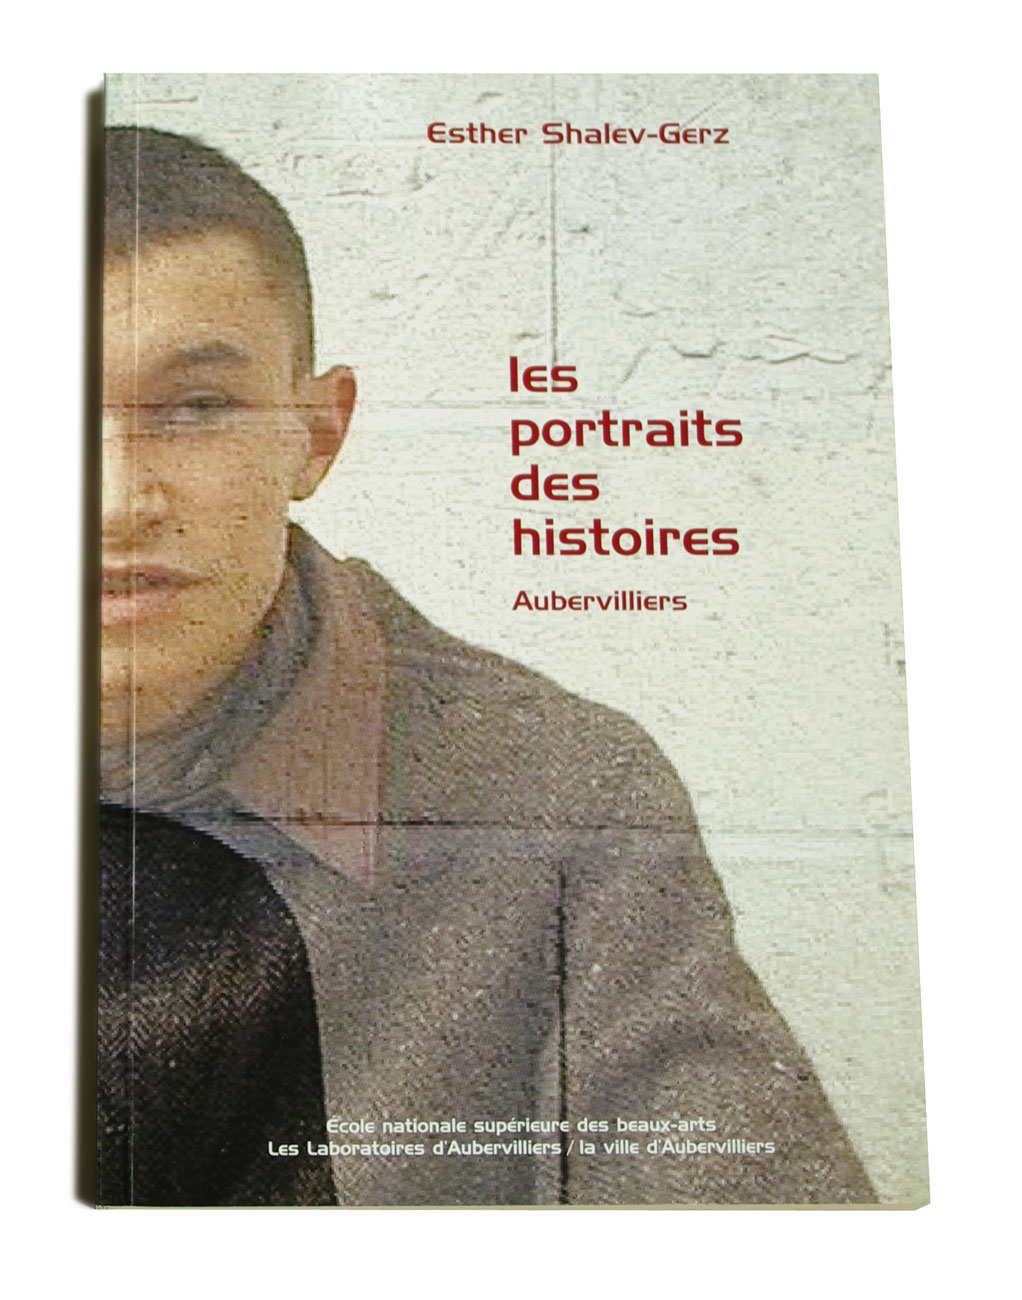 BOOK_Aubervilliers_01